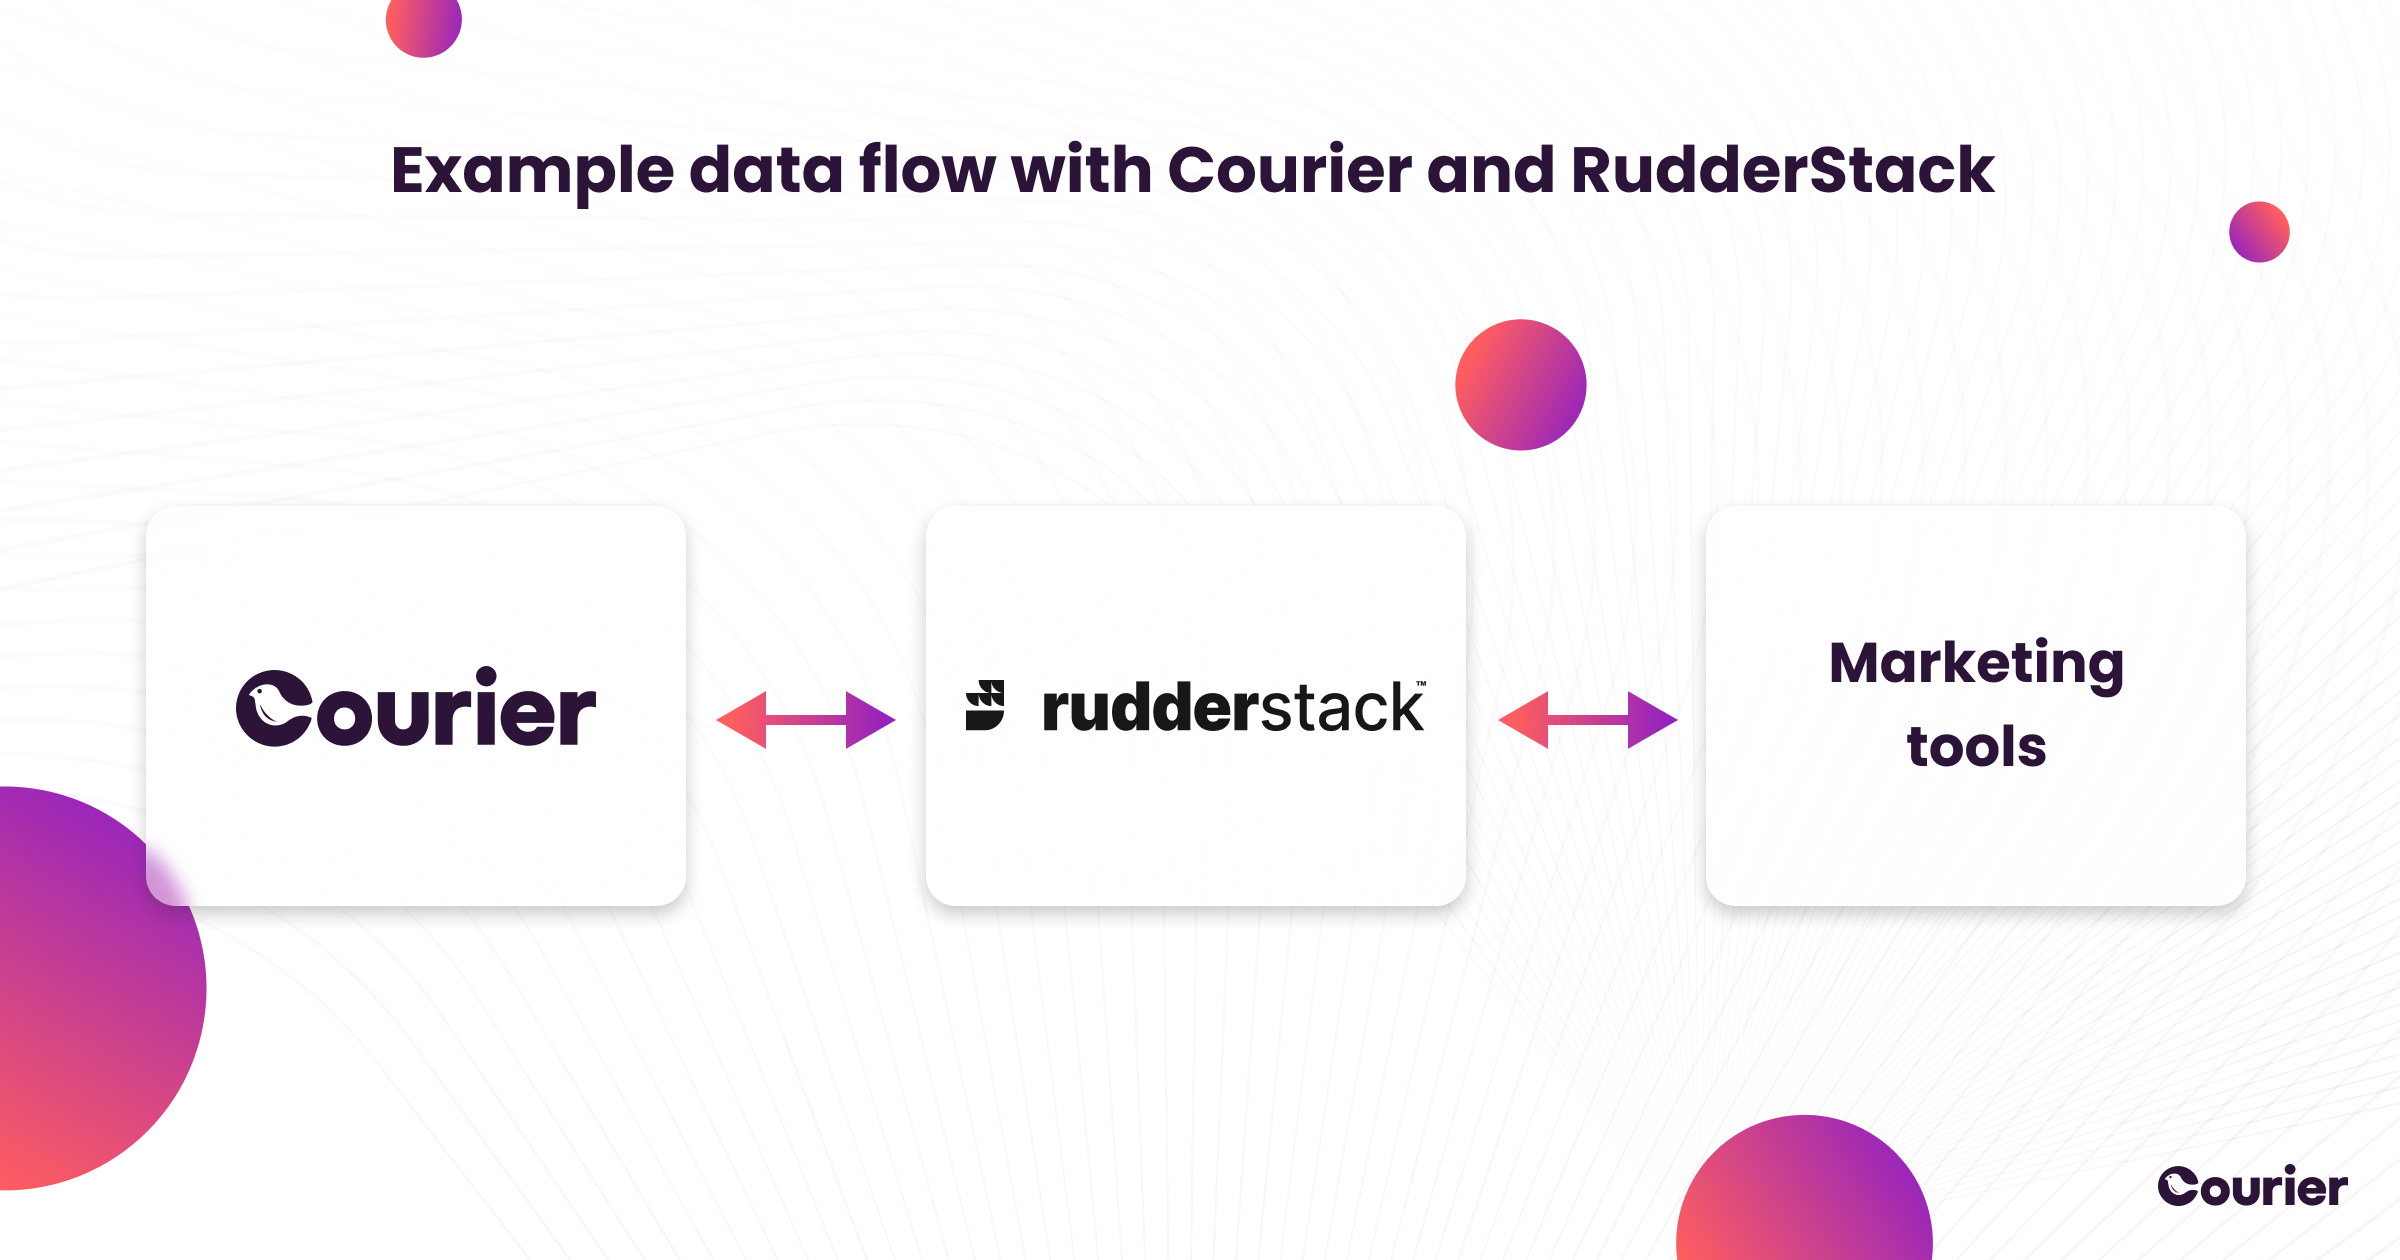 Rudderstack Courier data flow